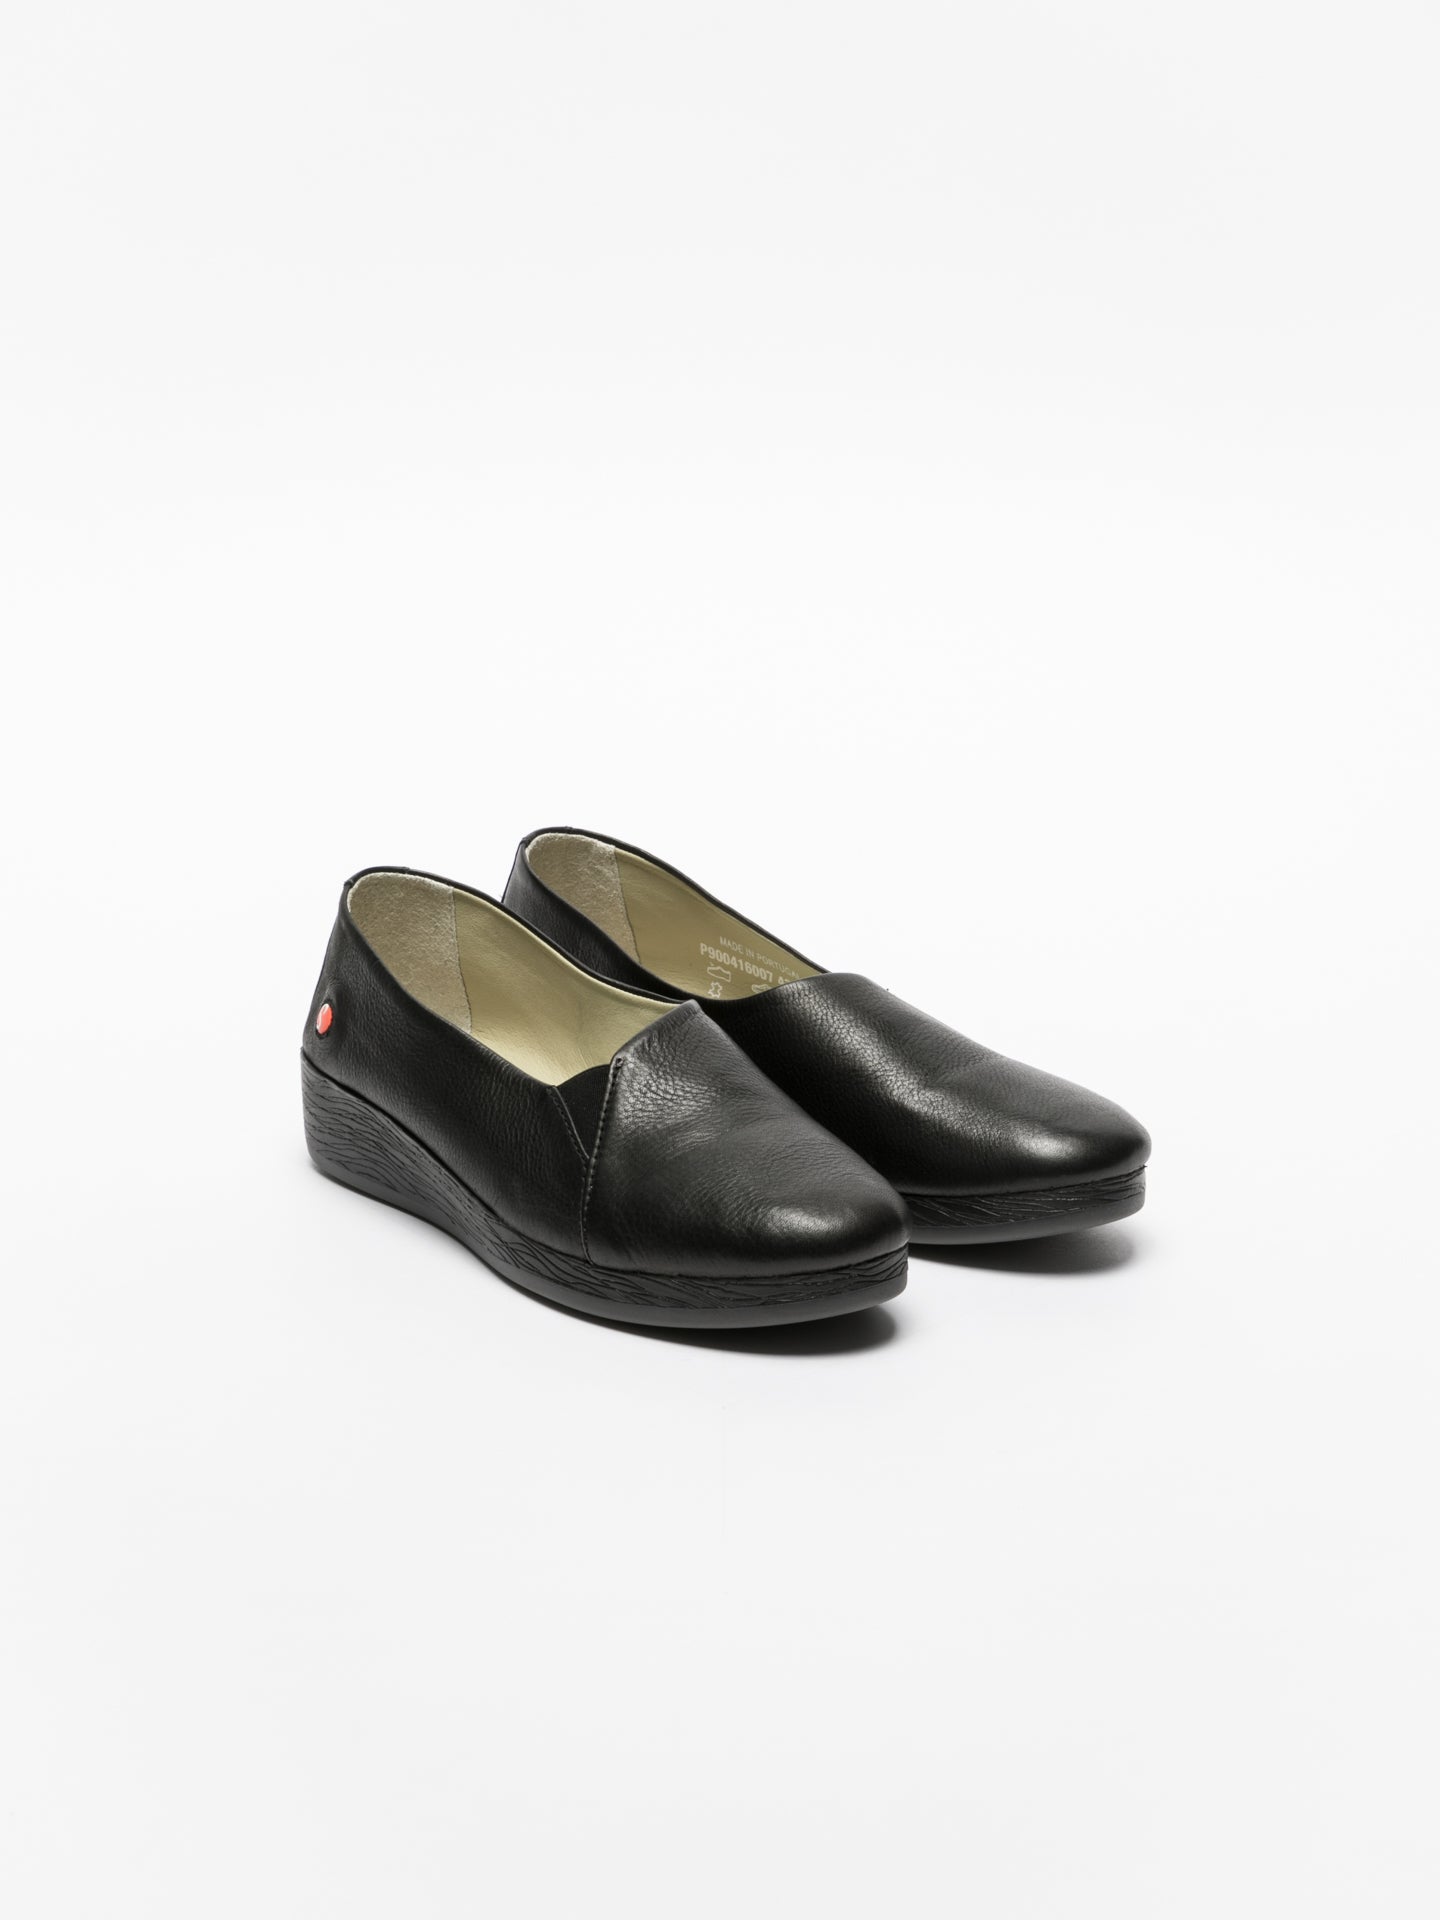 Softinos Coal Black Wedge Shoes